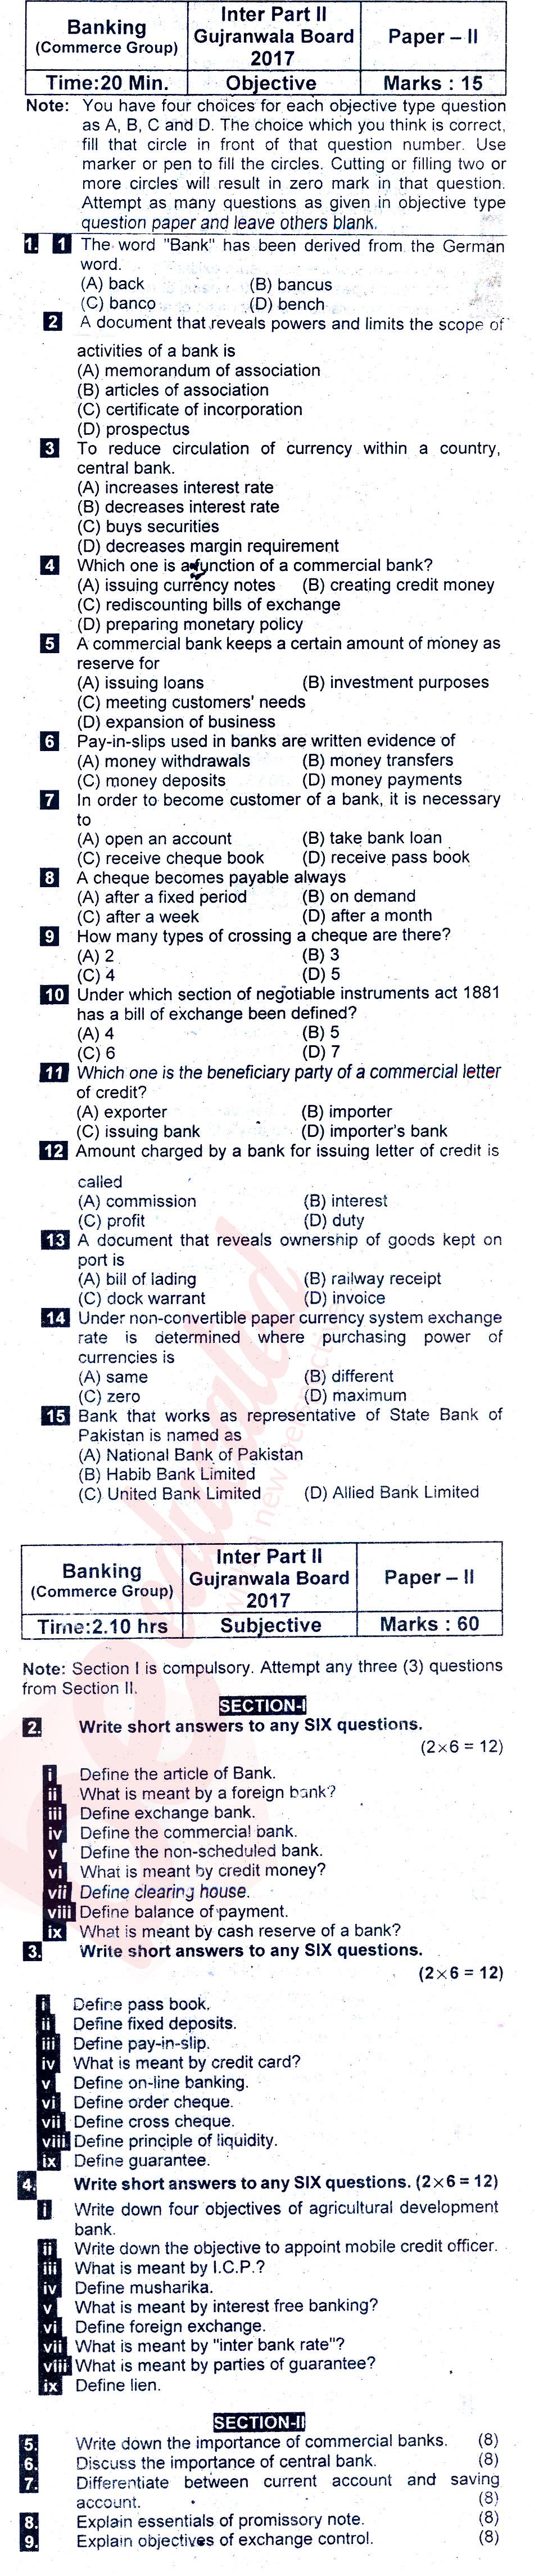 Principles of Banking ICOM Part 2 Past Paper Group 1 BISE Gujranwala 2017